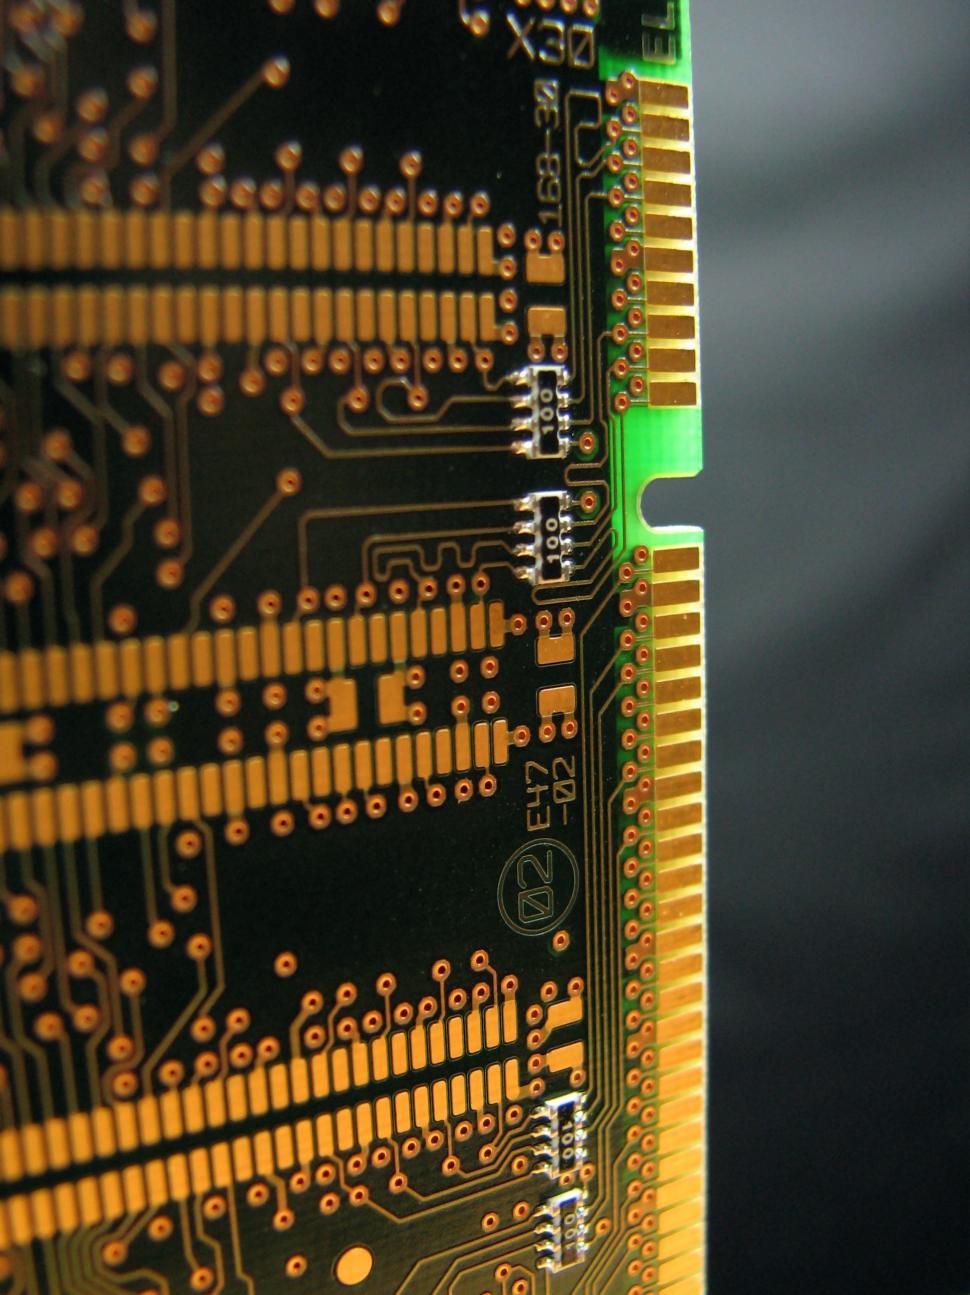 Free Image of Closeup of a computer memory card 